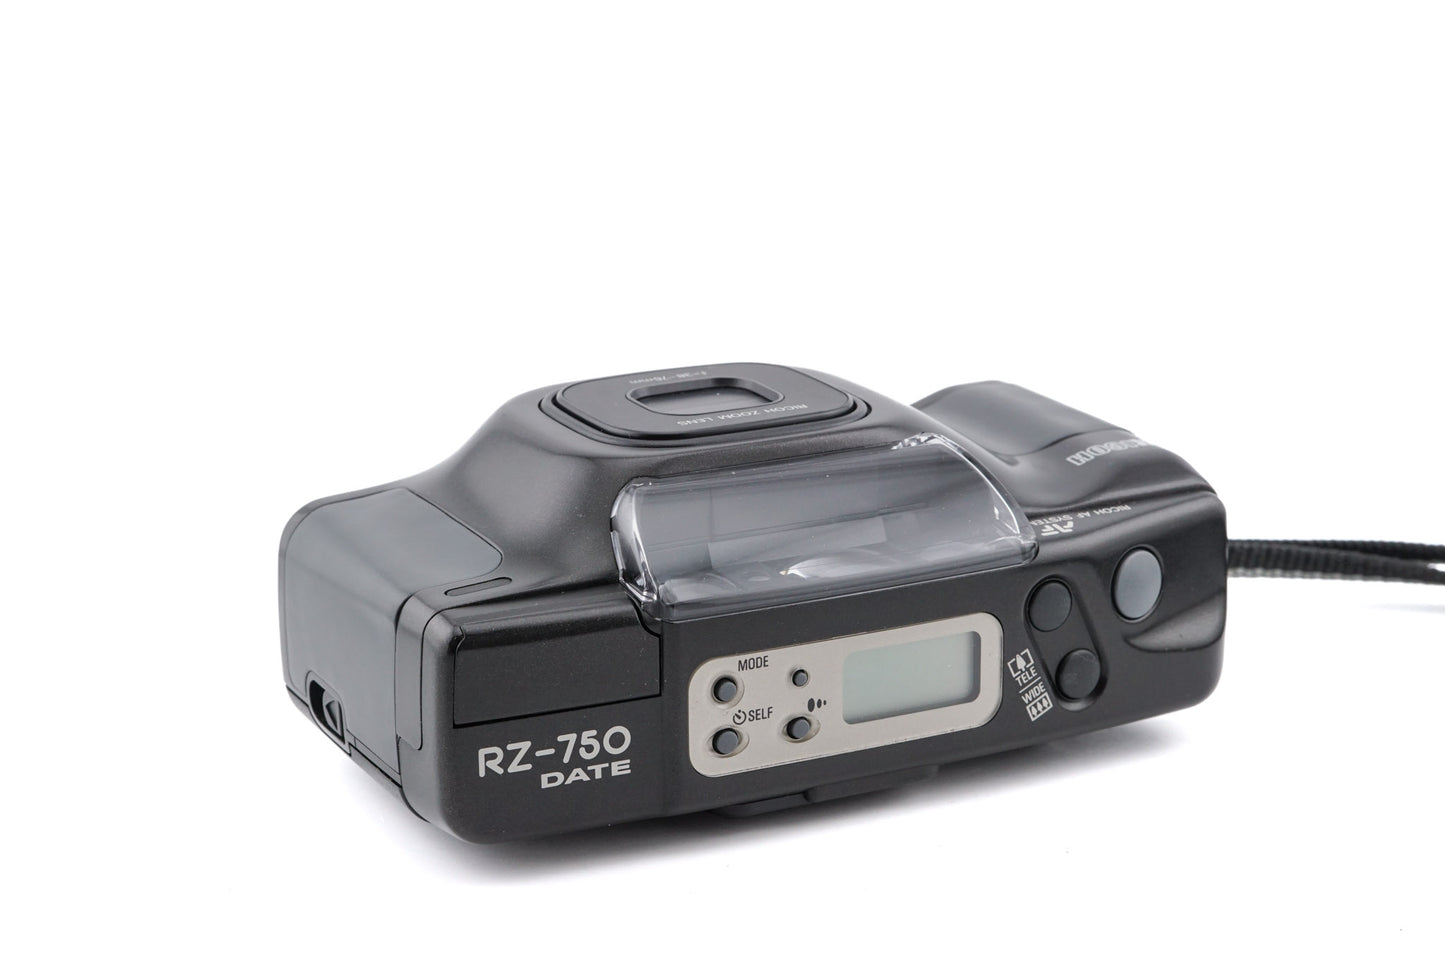 Ricoh RZ-750 Date